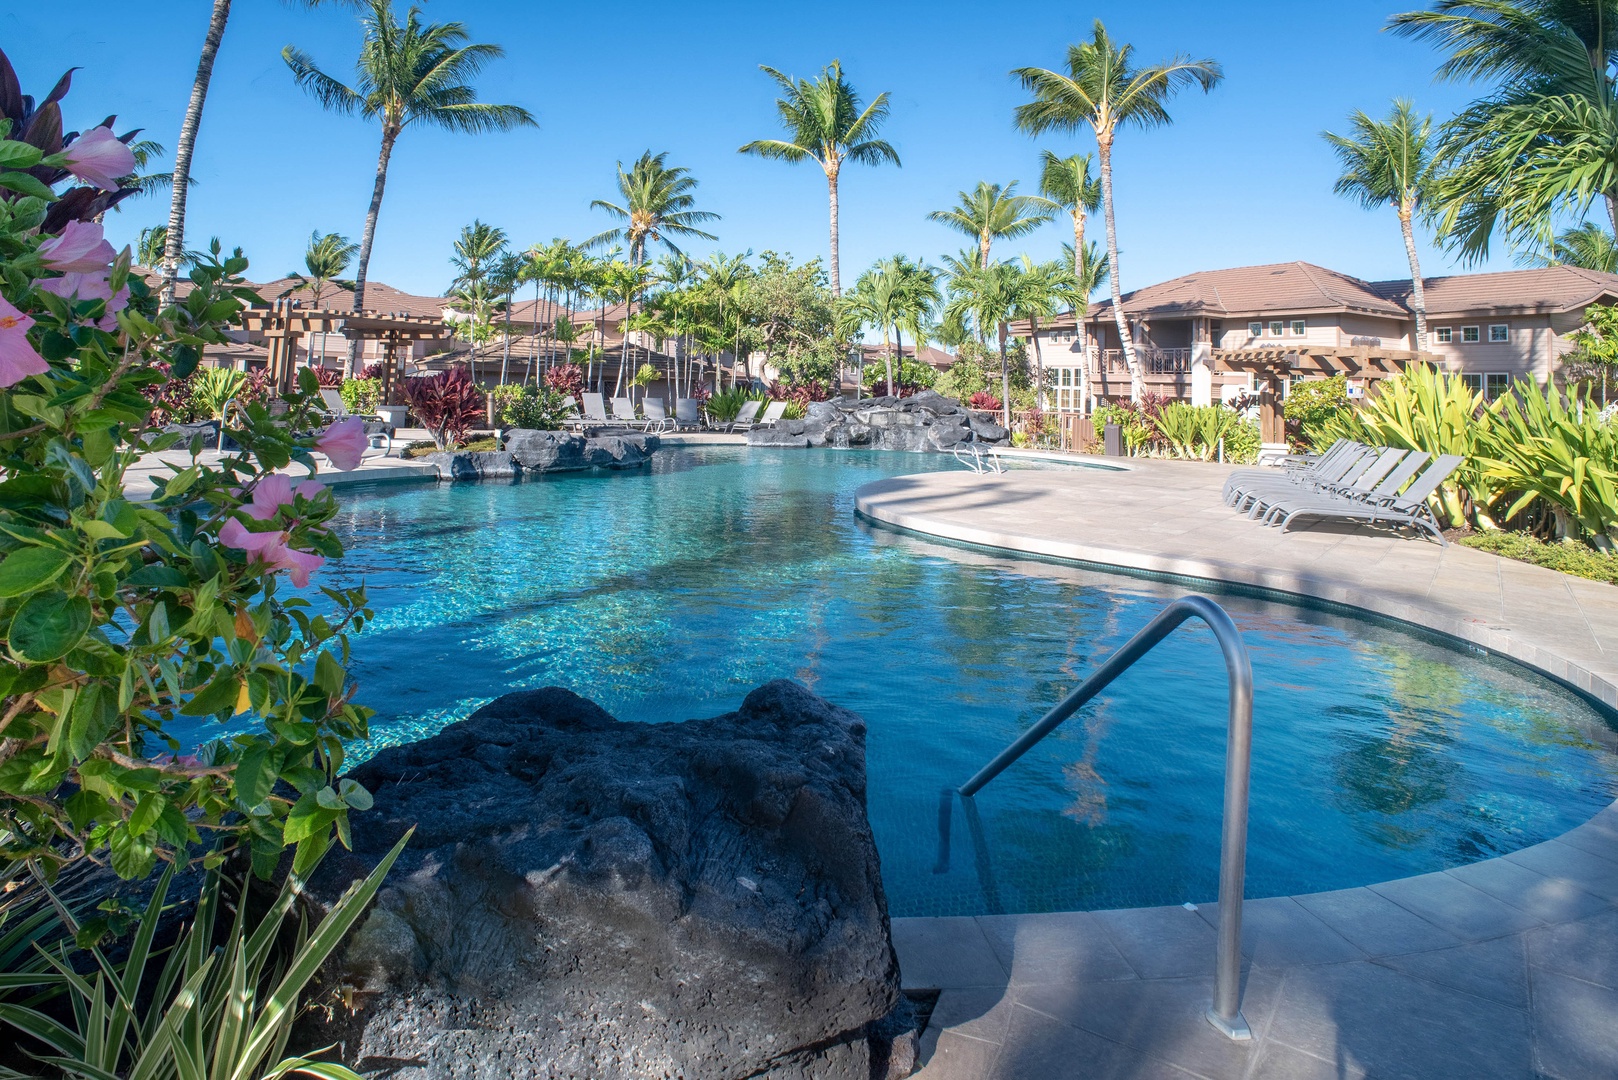 Waikoloa Vacation Rentals, Waikoloa Colony Villas 2101 - Waikoloa Colony Villas Free-From Swimming Pool w/ Jacuzzi, BBQ Area, Loungers, Cascading Waterfall & Two Fitness Centers